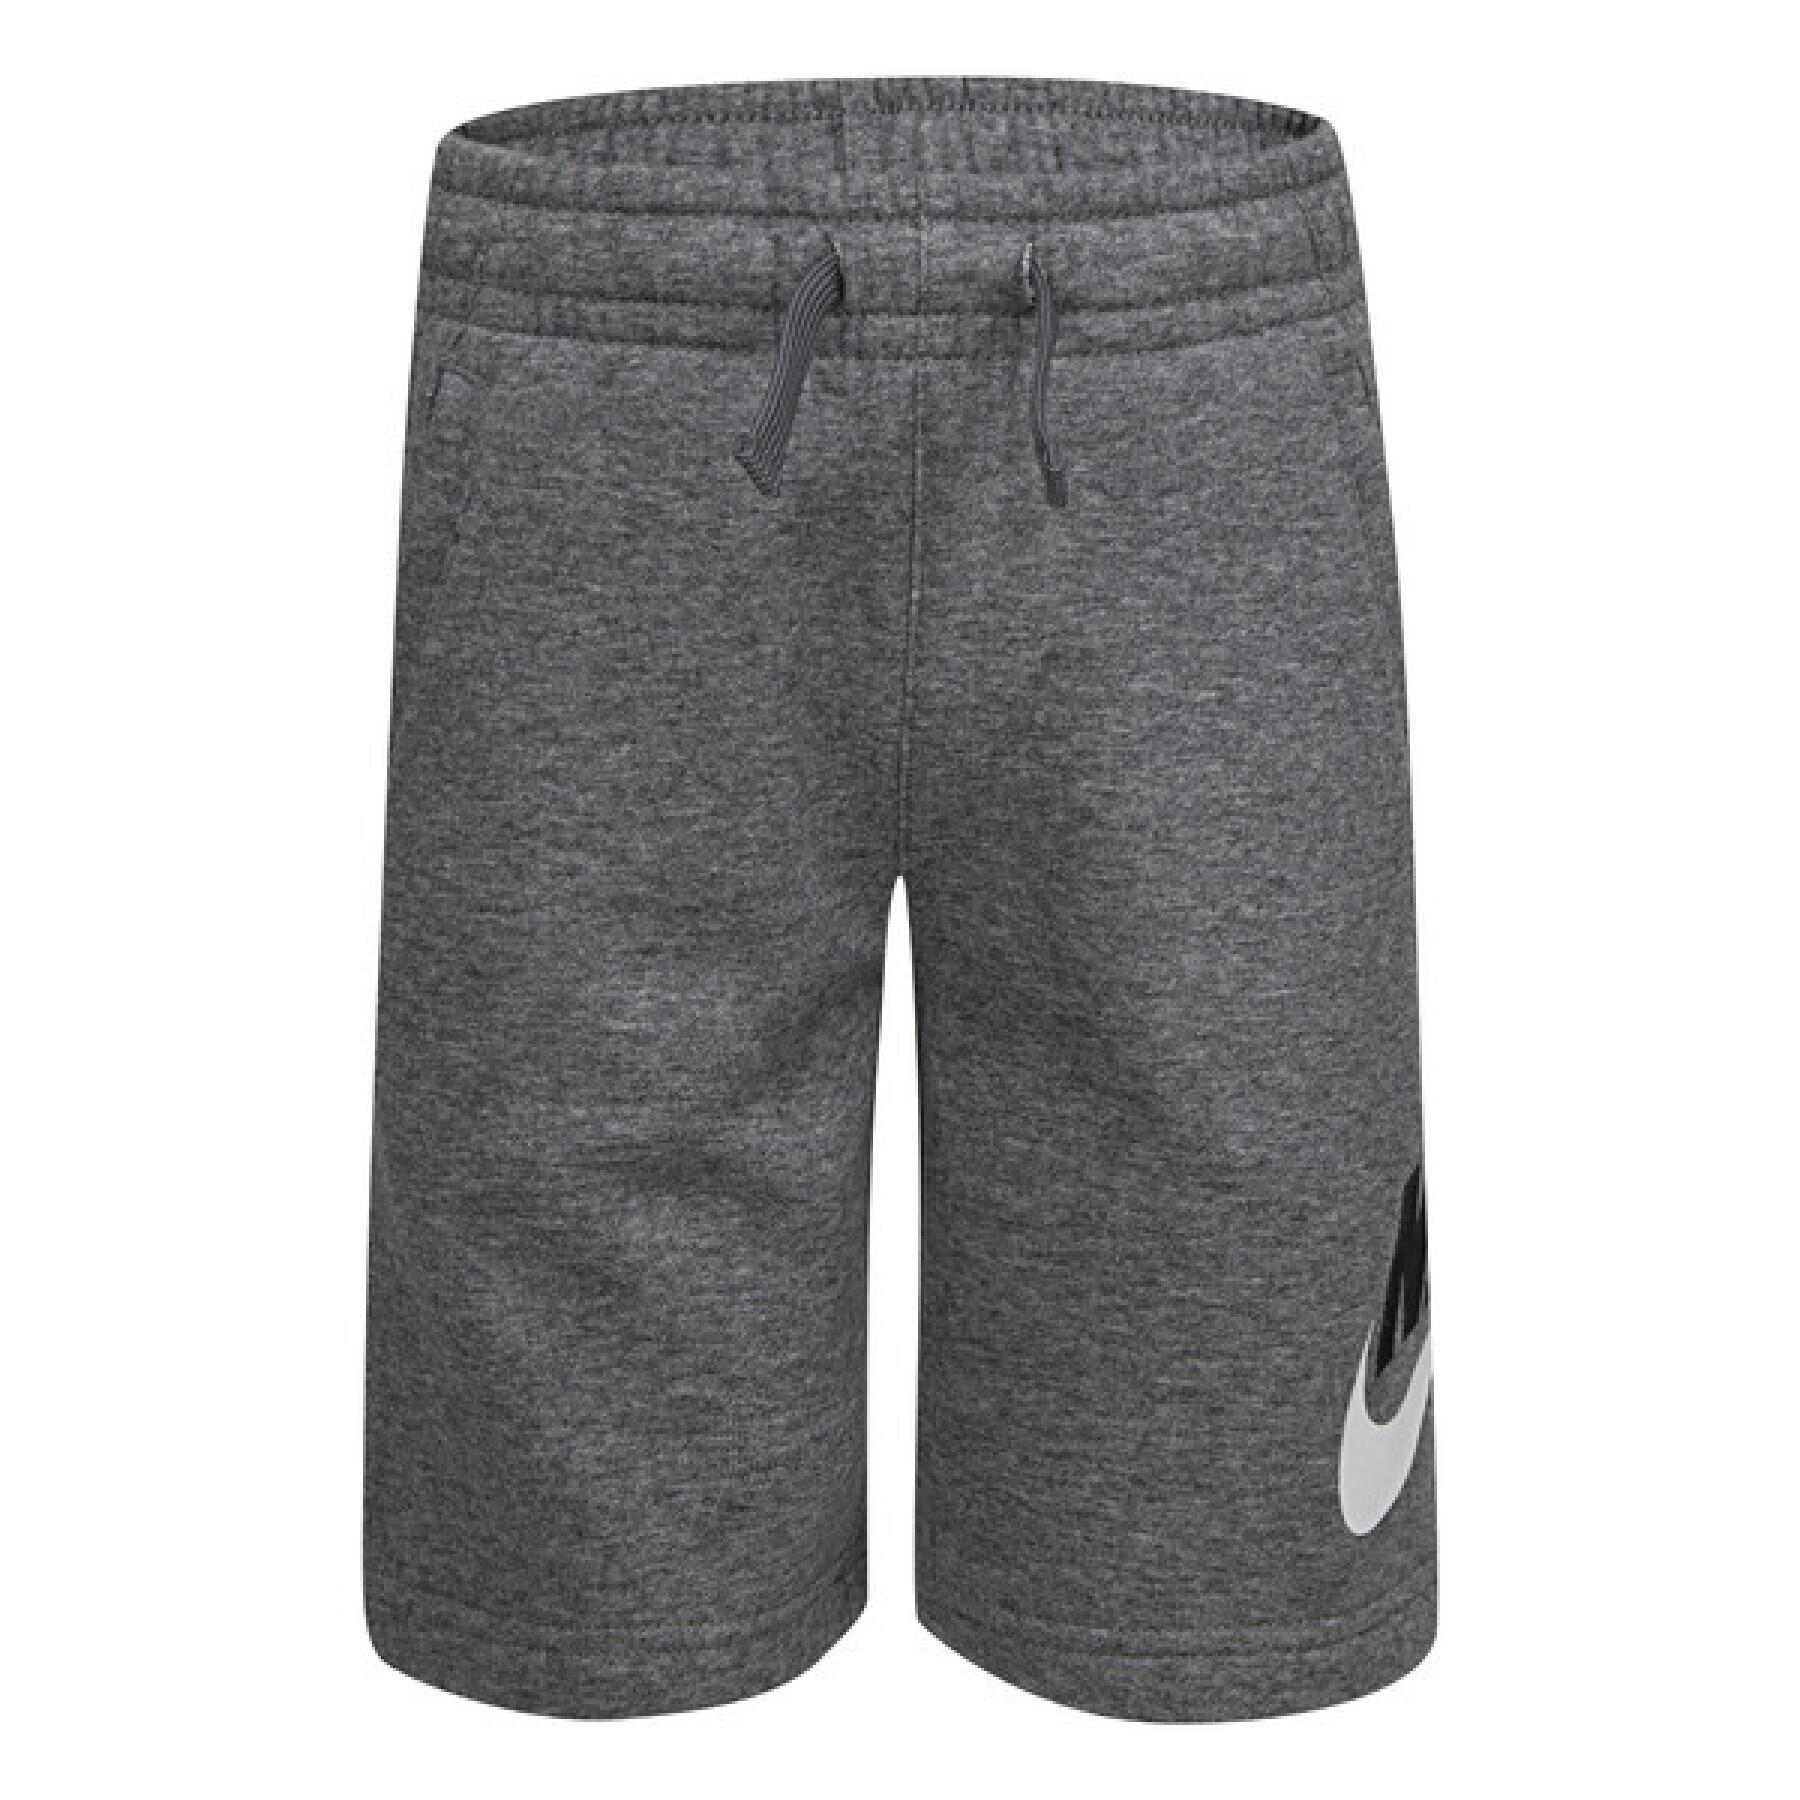 Children's shorts Nike Club HBR FT - Nike - Brands - Lifestyle